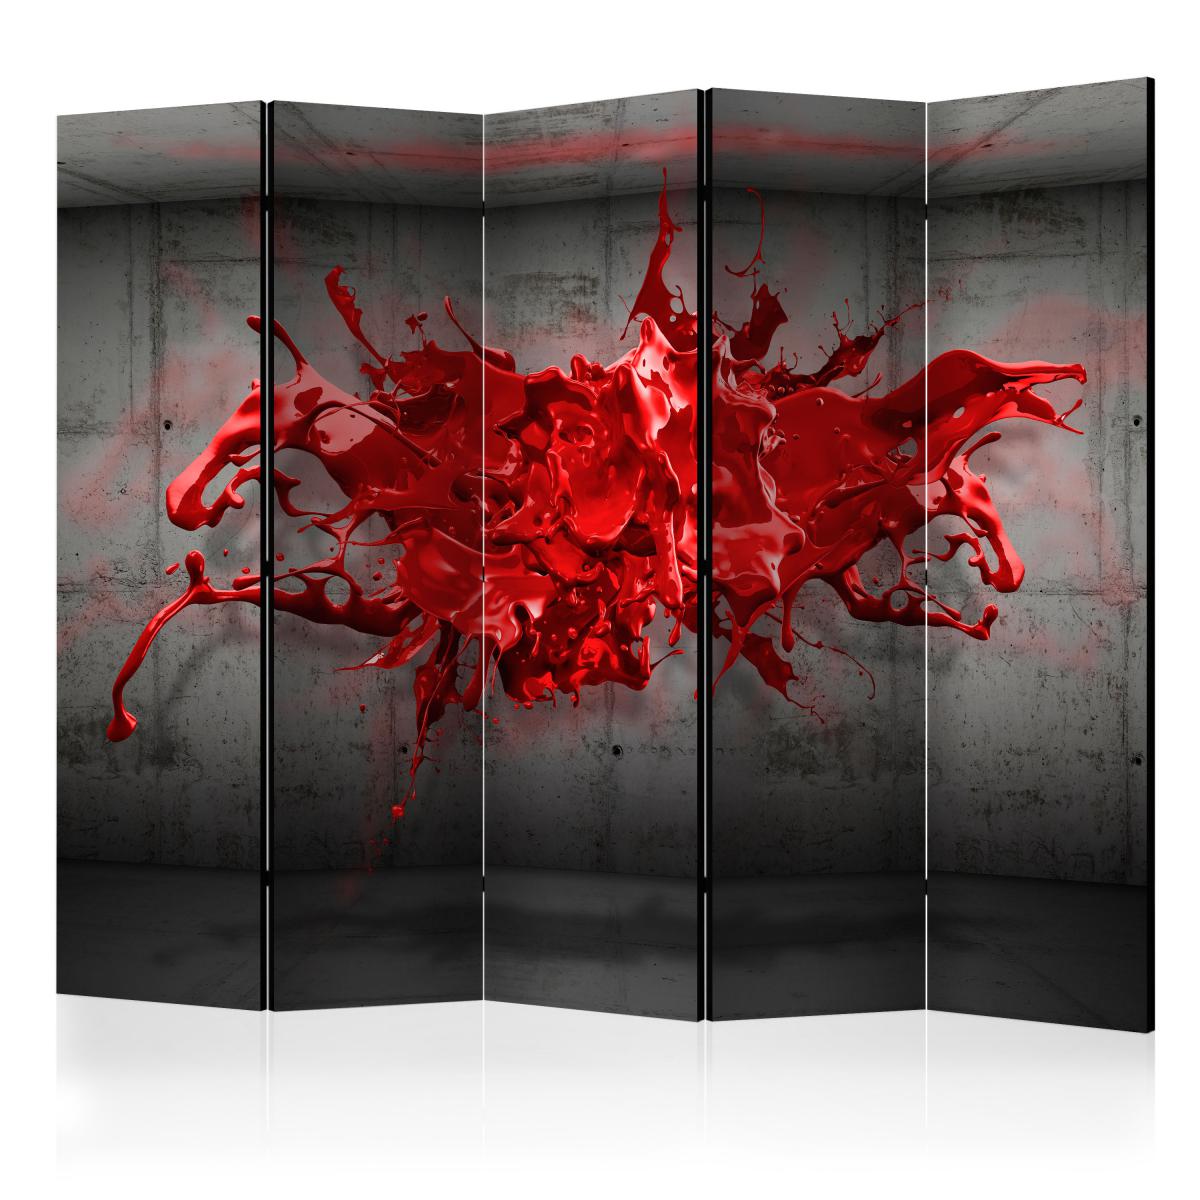 Bimago - Paravent 5 volets - Red Ink Blot II [Room Dividers] - Décoration, image, art | 225x172 cm | XL - Grand Format | - Cloisons